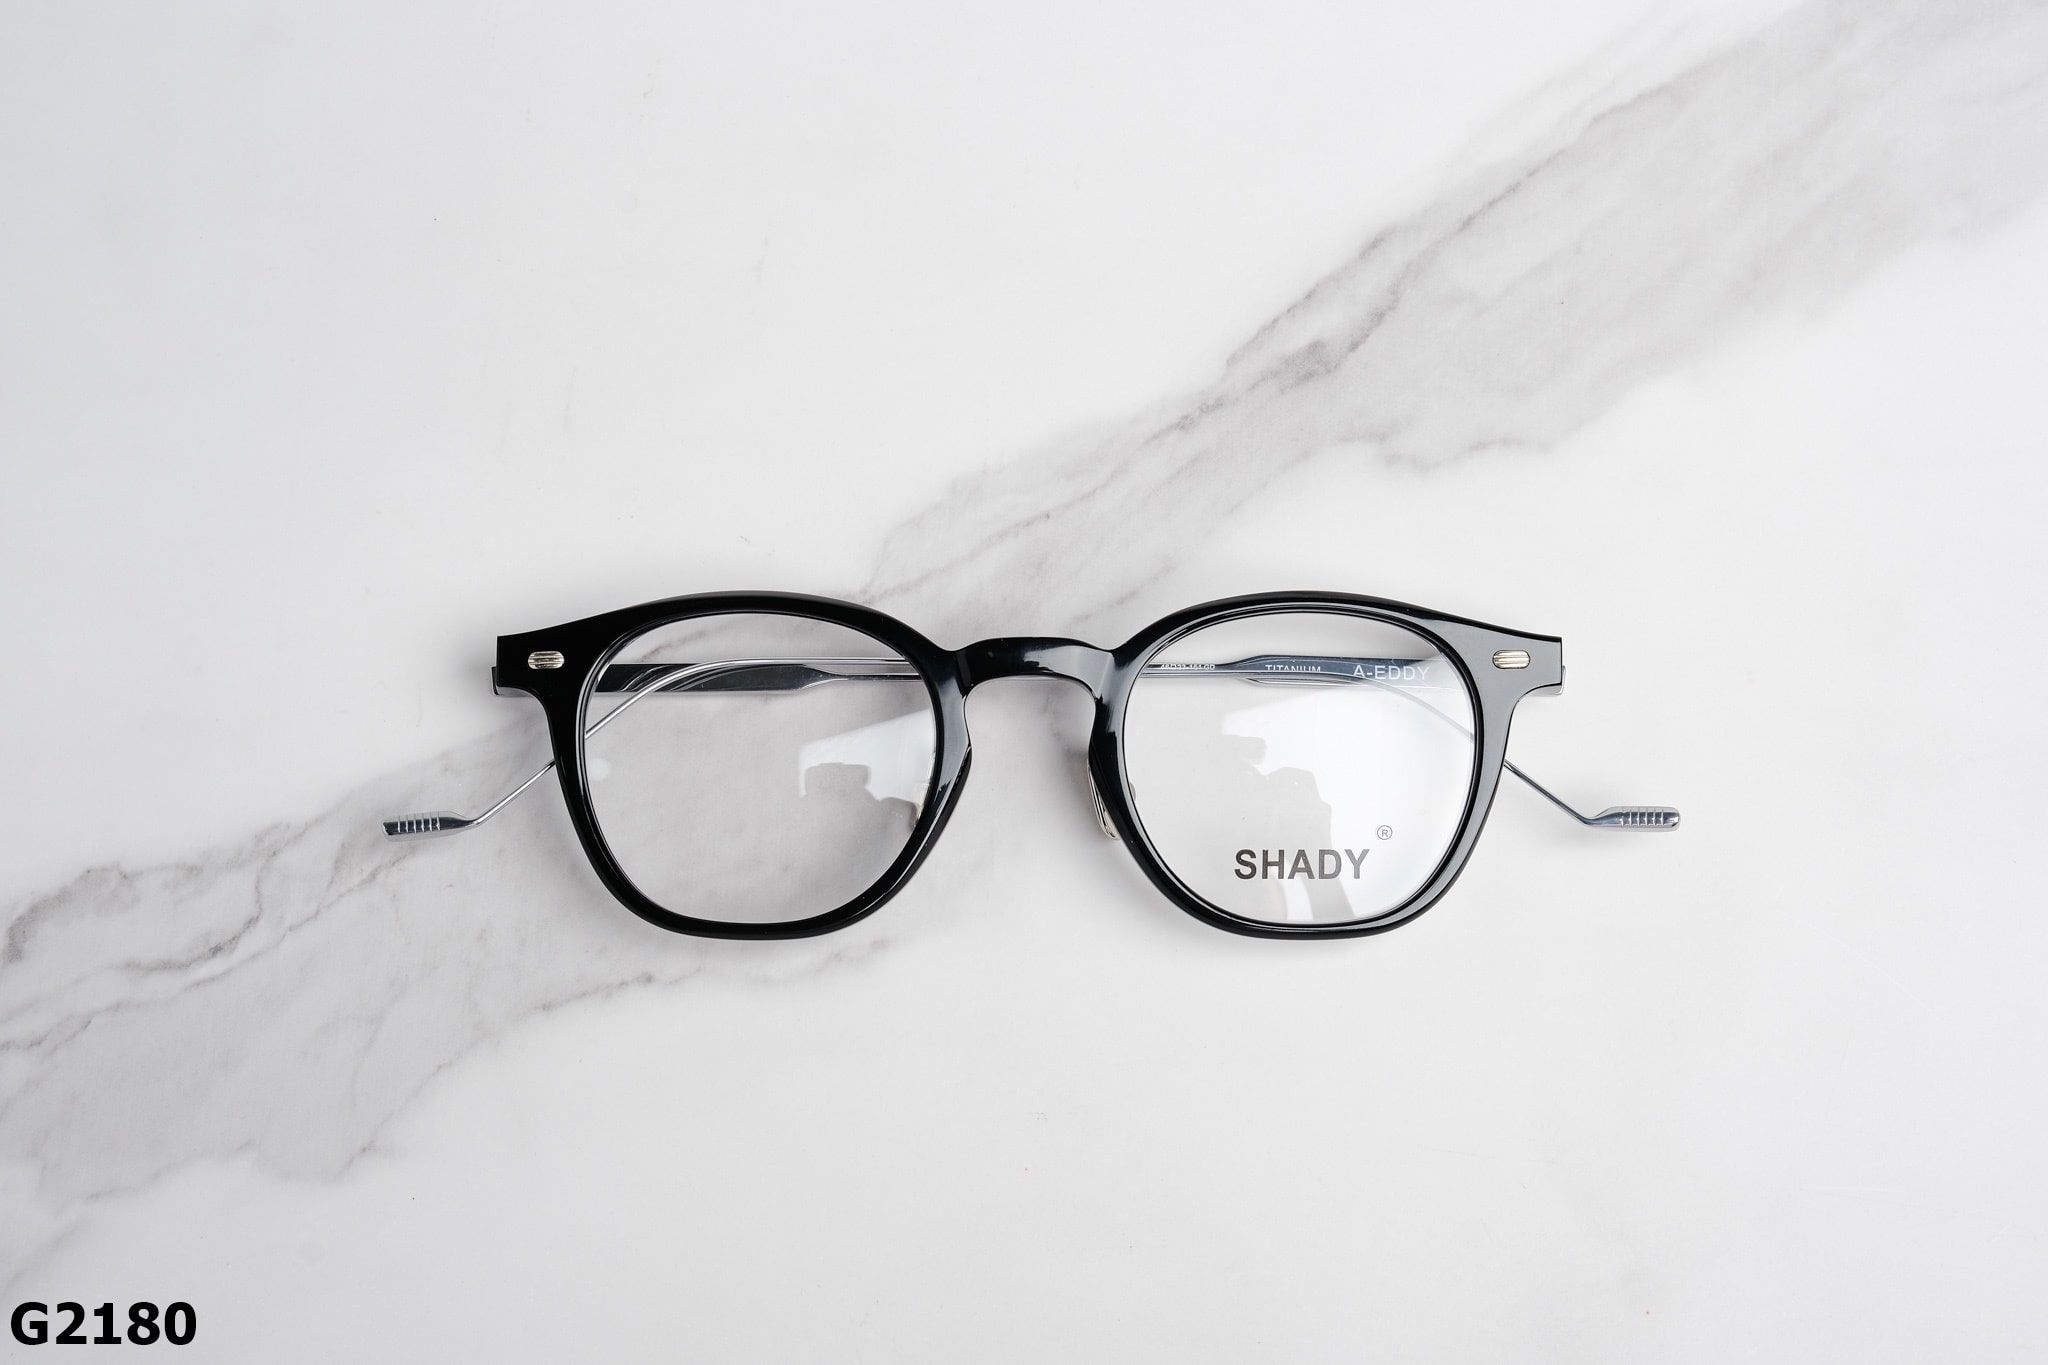  SHADY Eyewear - Glasses - G2180 